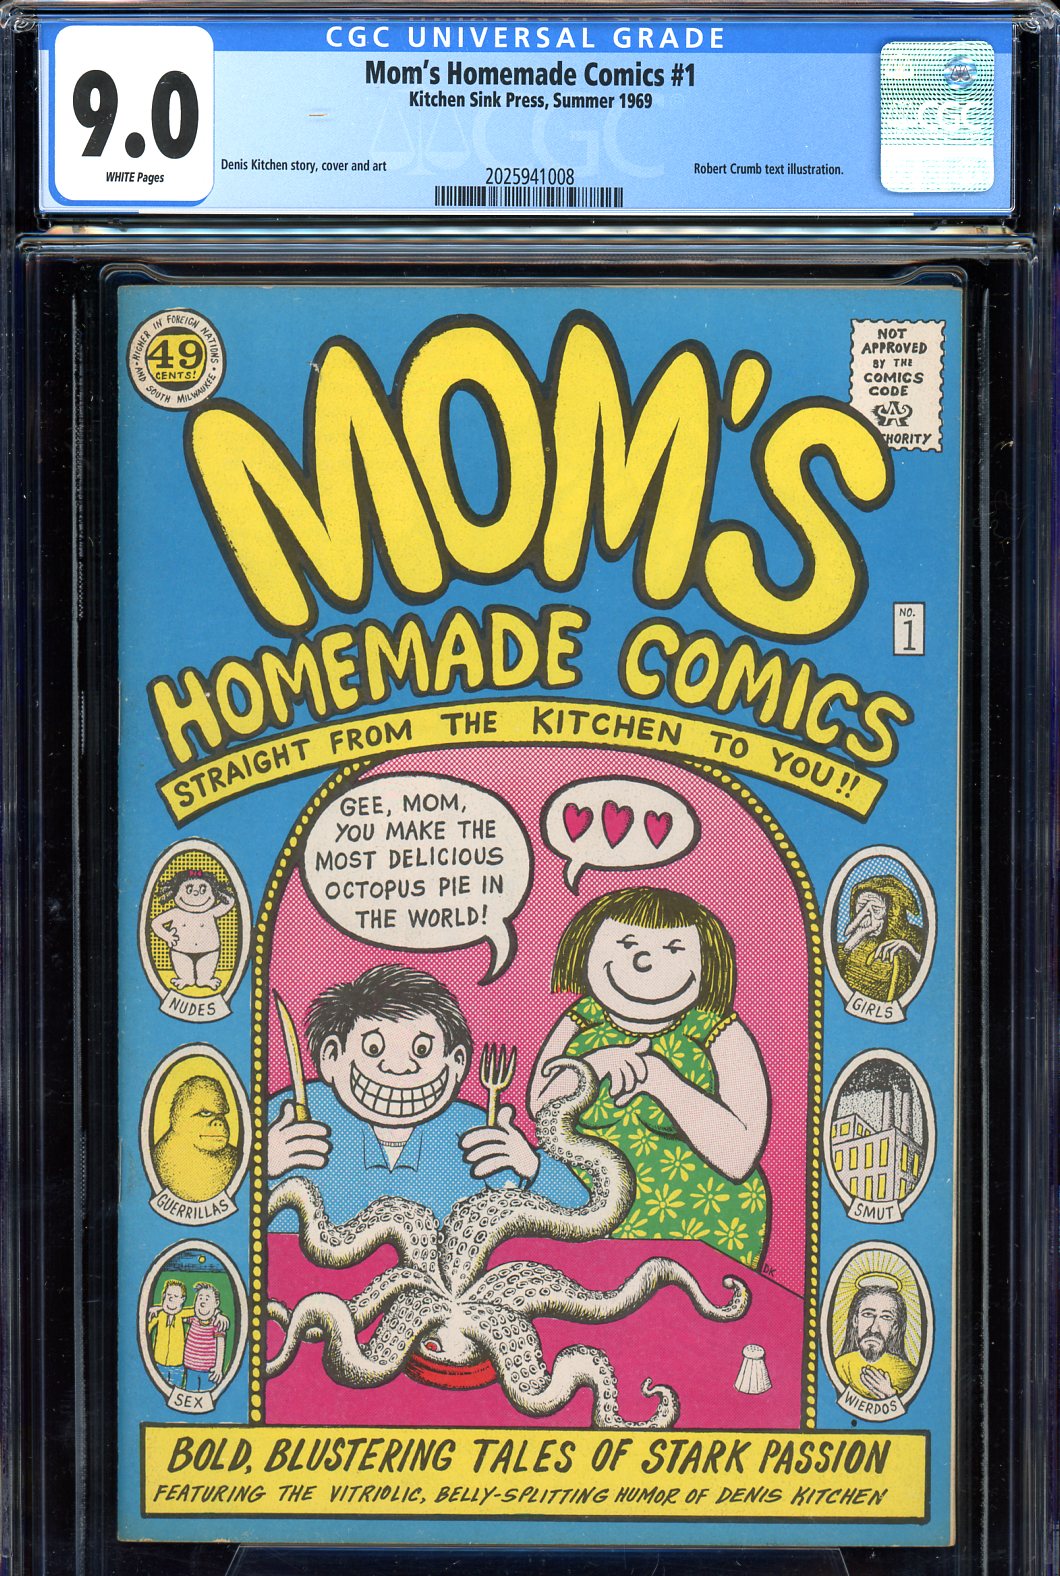 Cedar Chest Comics - Moms Homemade Comics #1 CGC graded 9.0 white pages image